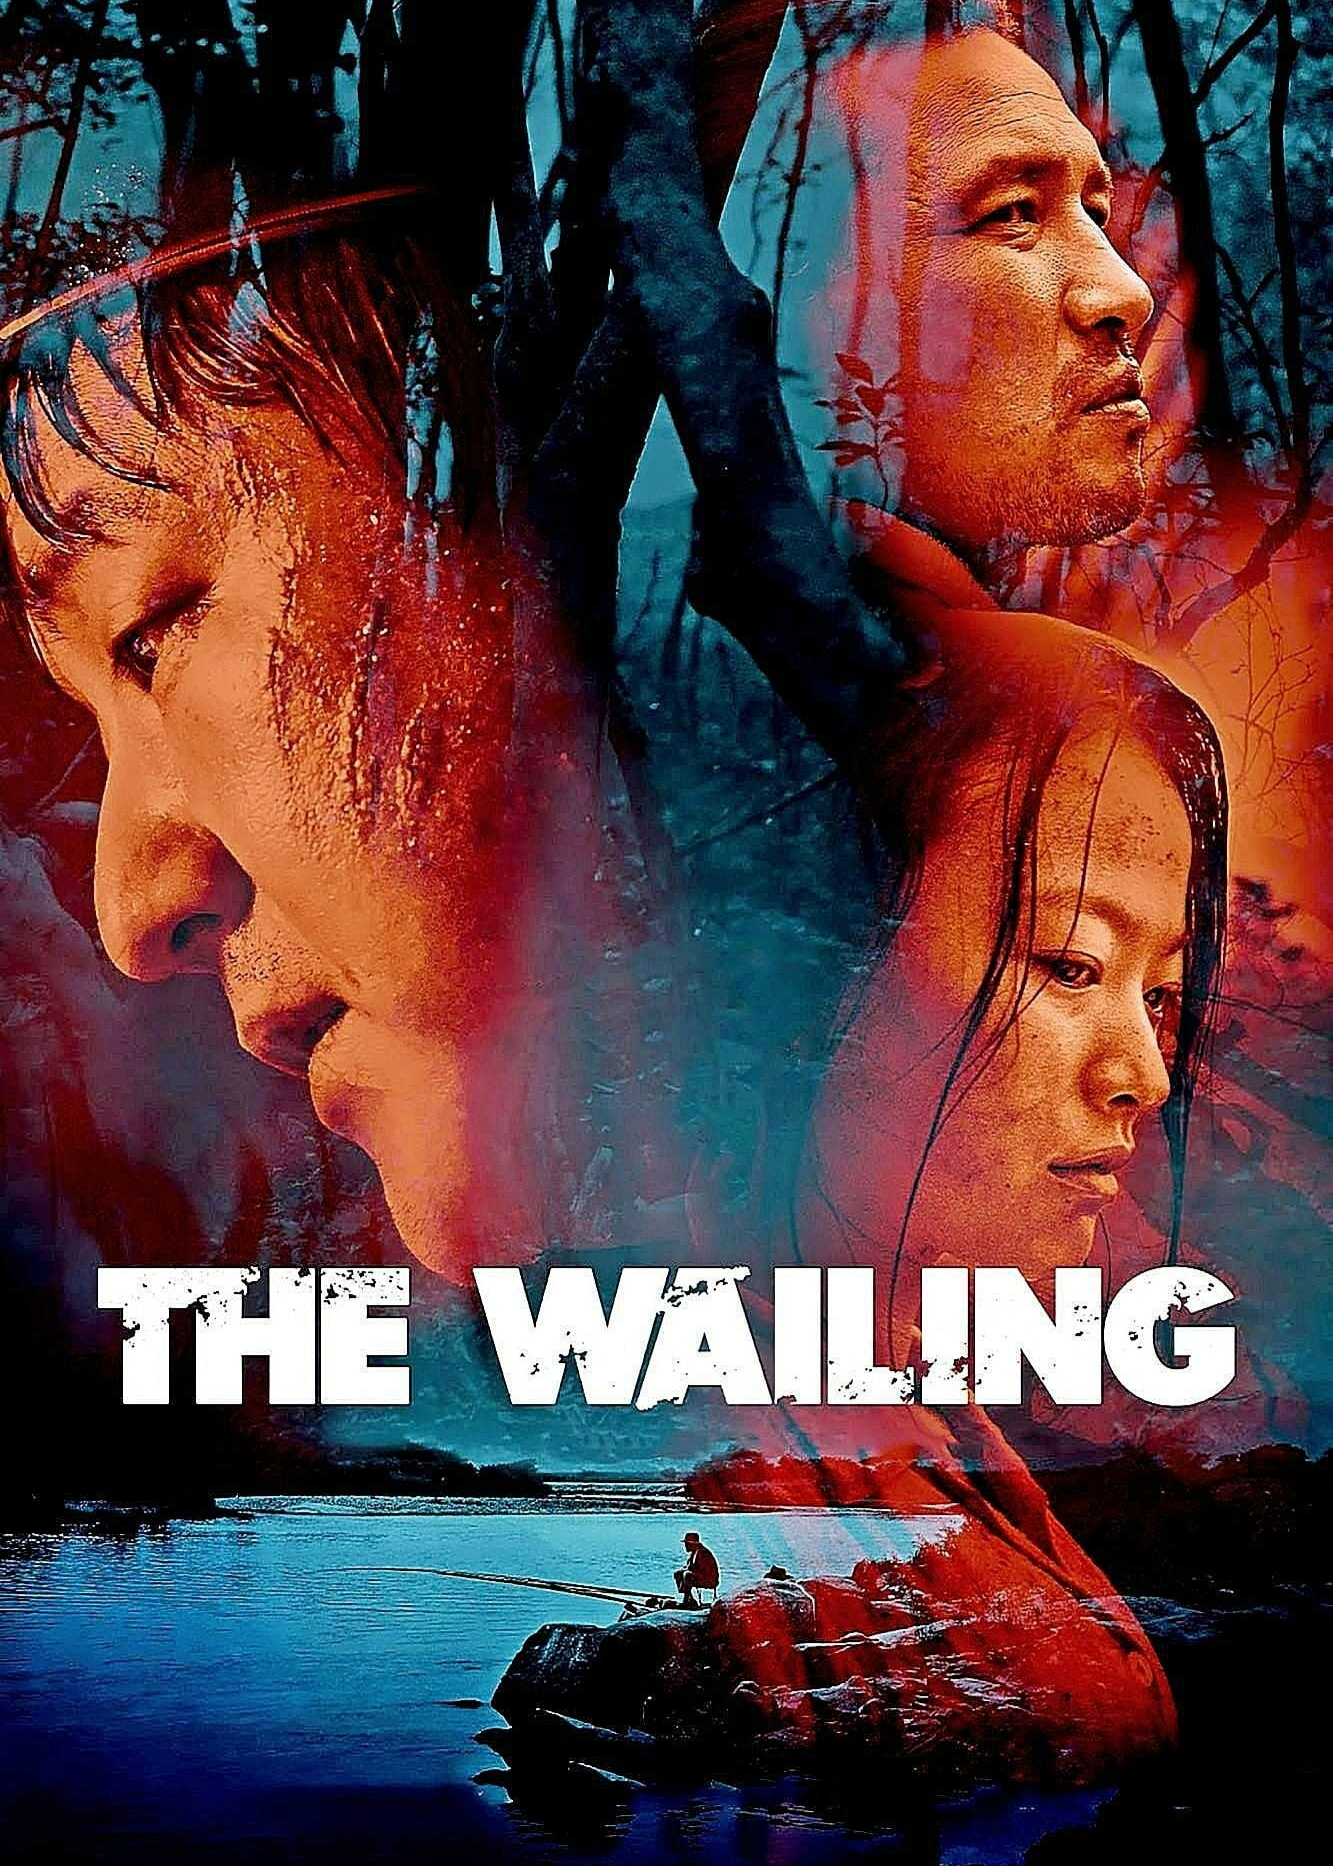 The Wailing - The Wailing